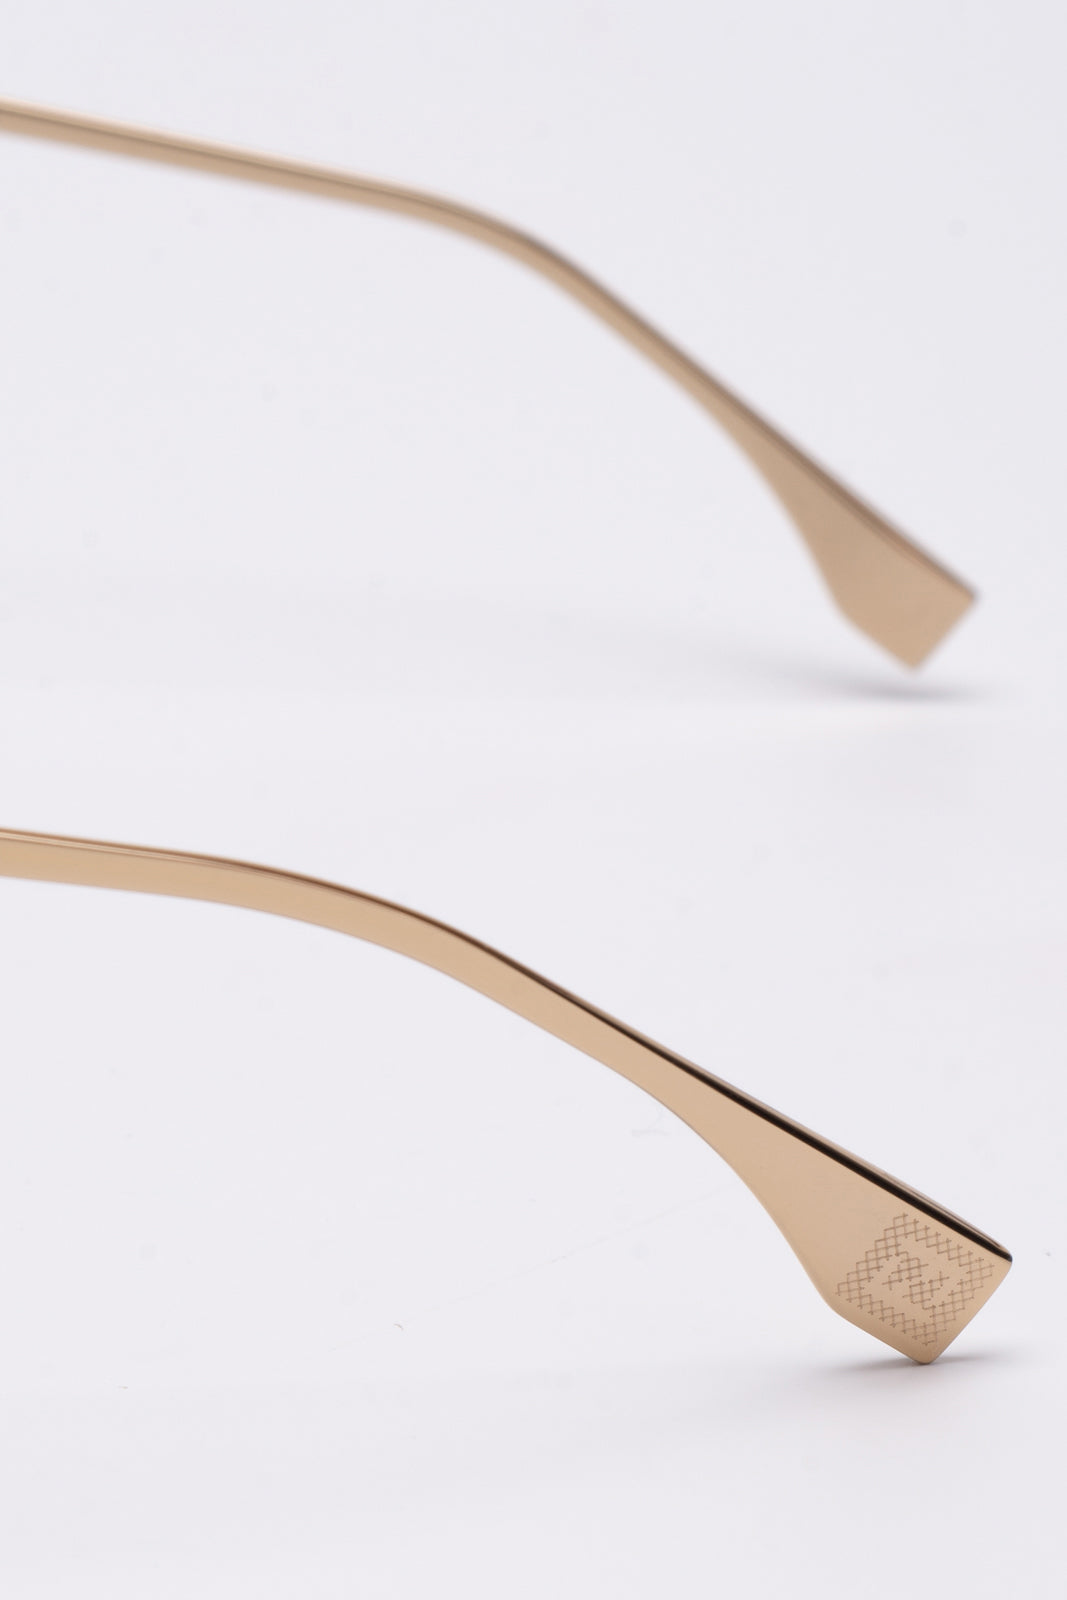 Fendi Men's Gold-Tone Ff-logo Rectangle Sunglasses